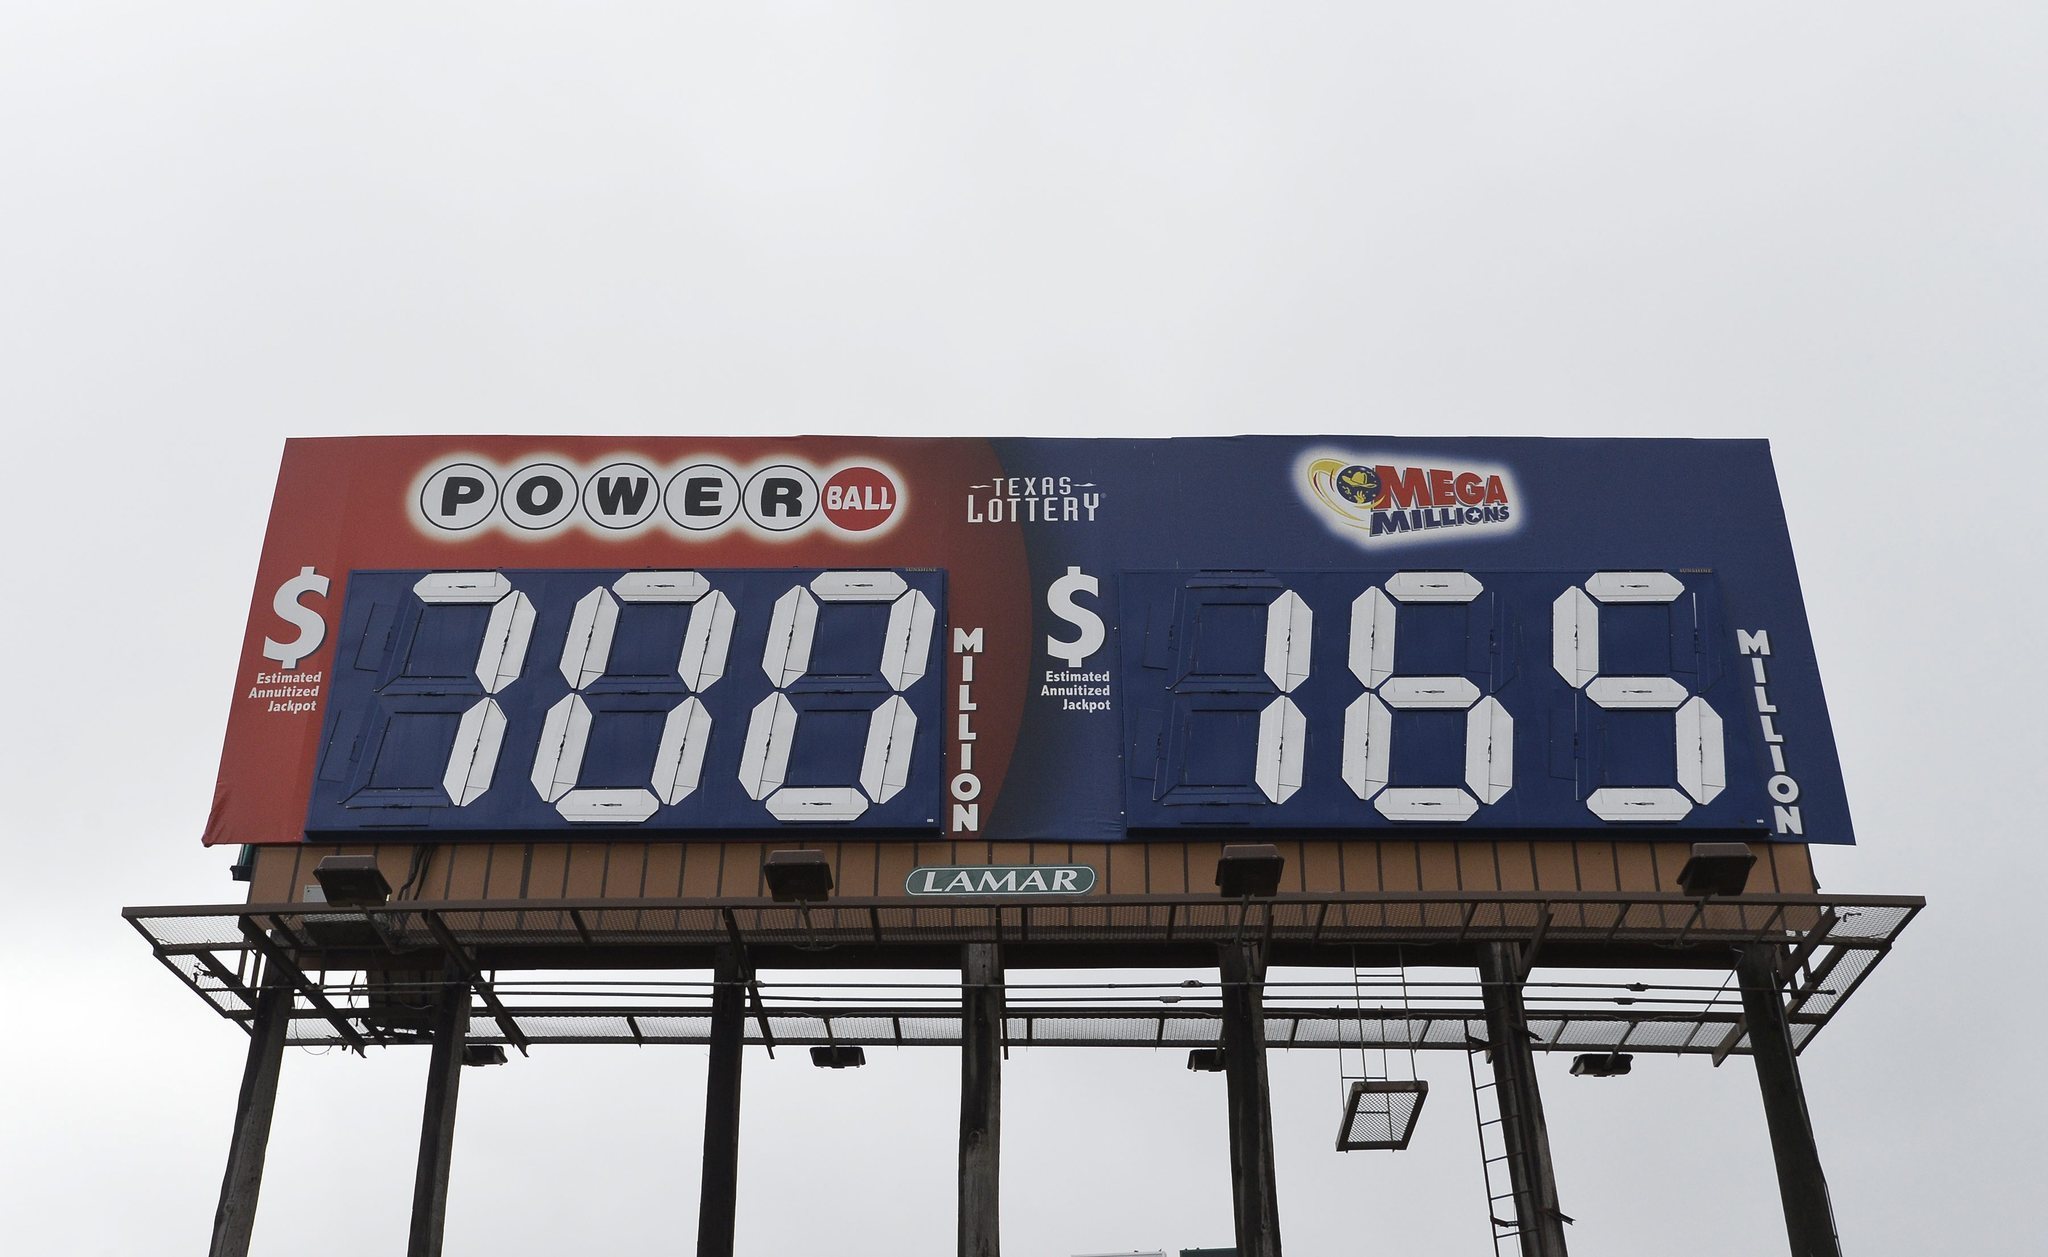 Powerball jackpot climbs to record $700 million - Chicago Tribune2048 x 1257